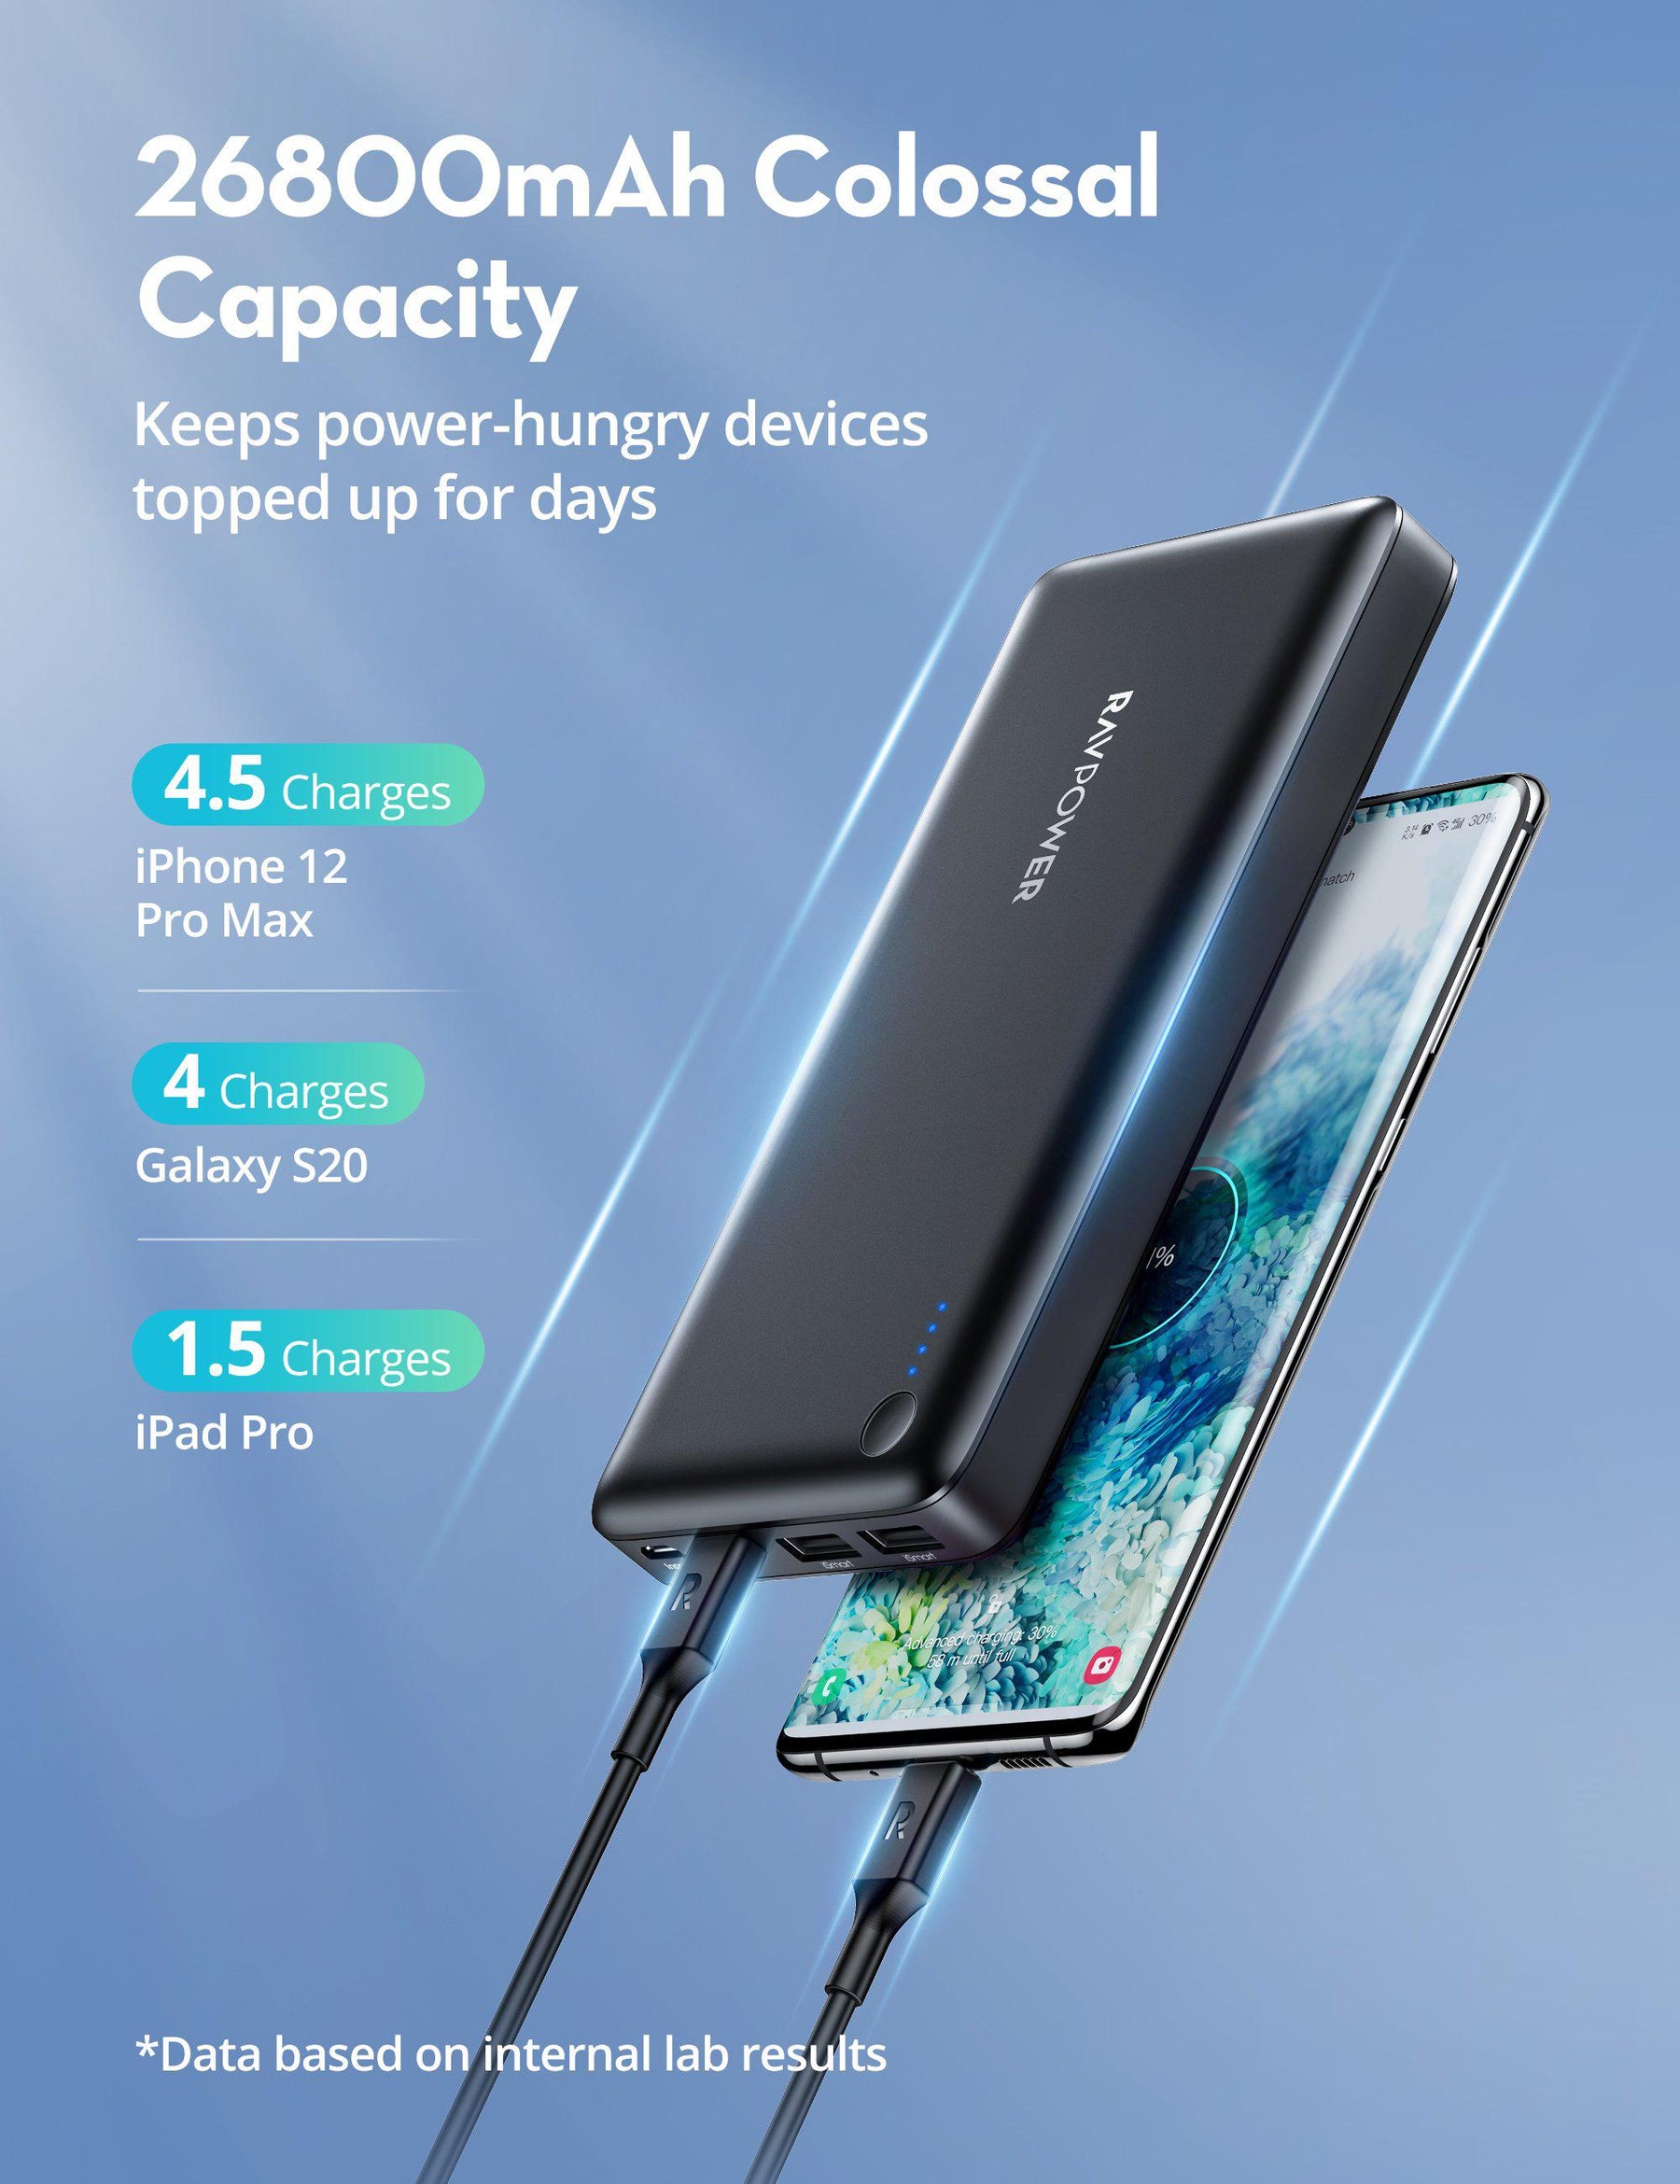 Originale Chargeur Samsung Galaxy A7 Charge rapid - Cdiscount Téléphonie